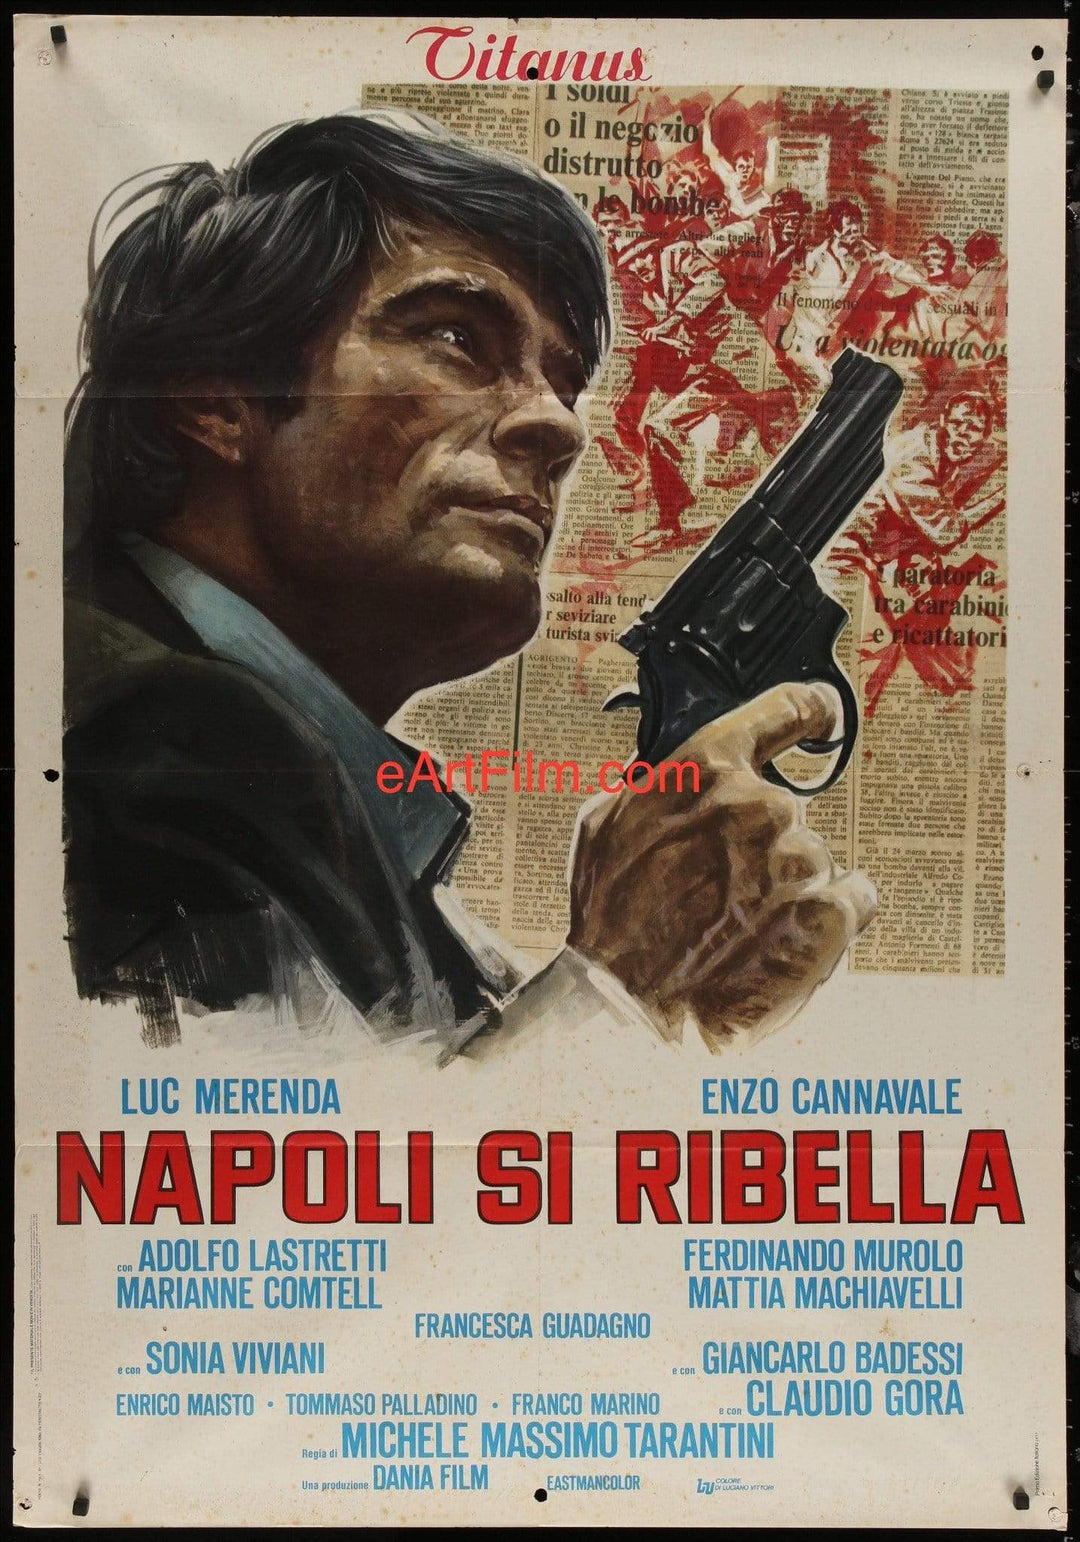 eArtFilm.com Italian 1 Panel (39"x55") 2 Fogli A Man Called Magnum aka Napoli Si Ribella 1977 39x55 Italian action crime thriller